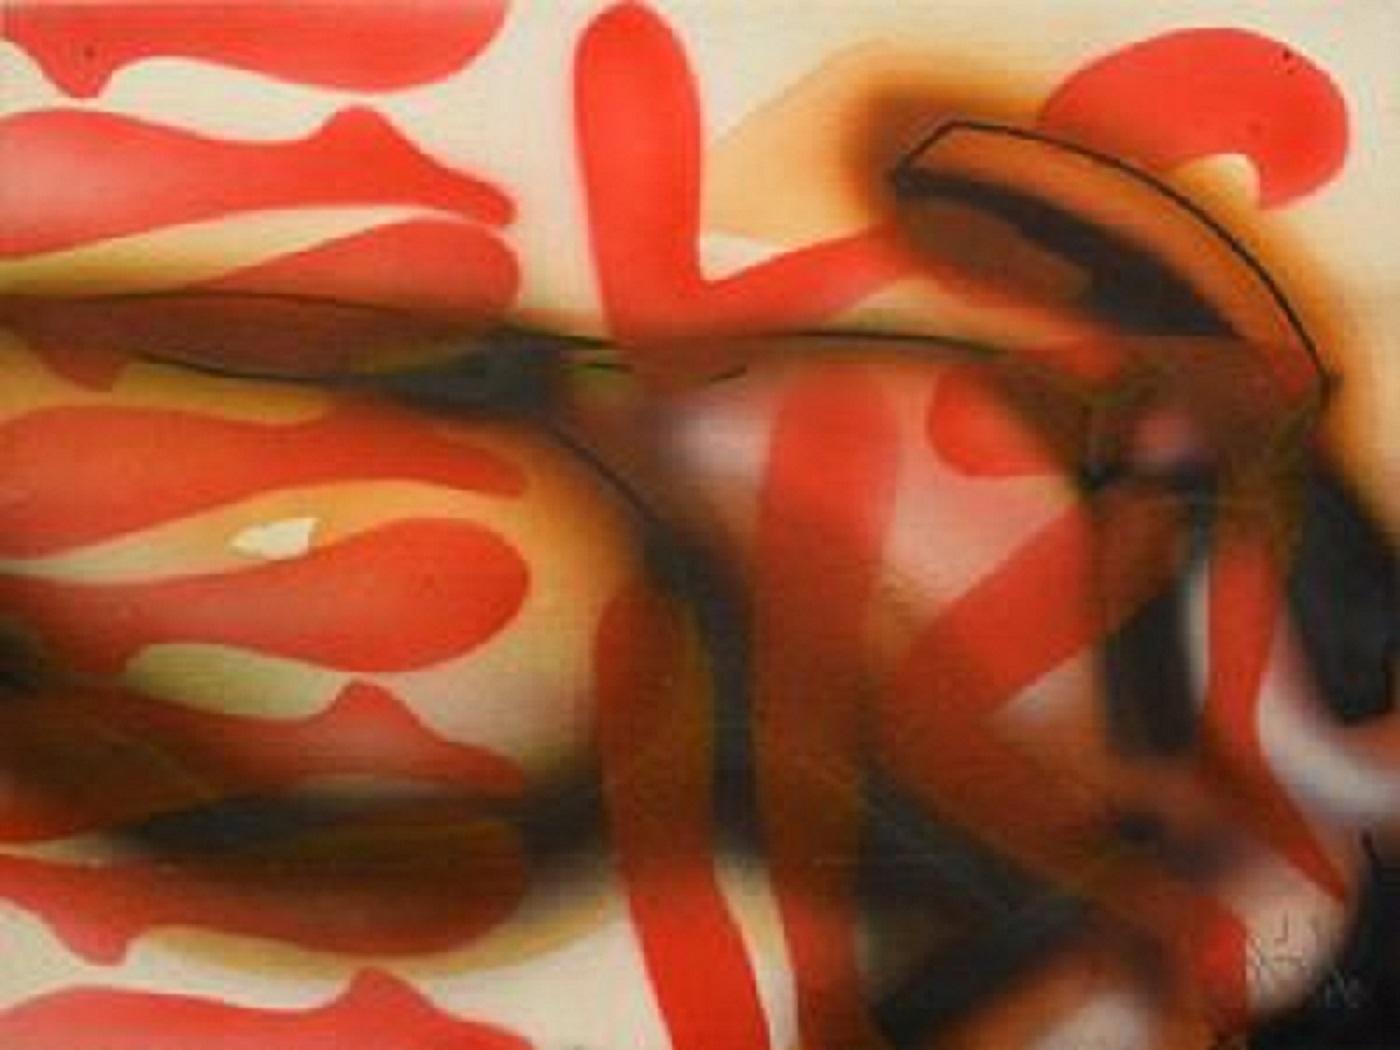 Luis Miguel Valdes, ¨Patas¨, 2000, Work on paper, 11.8x15.7 in